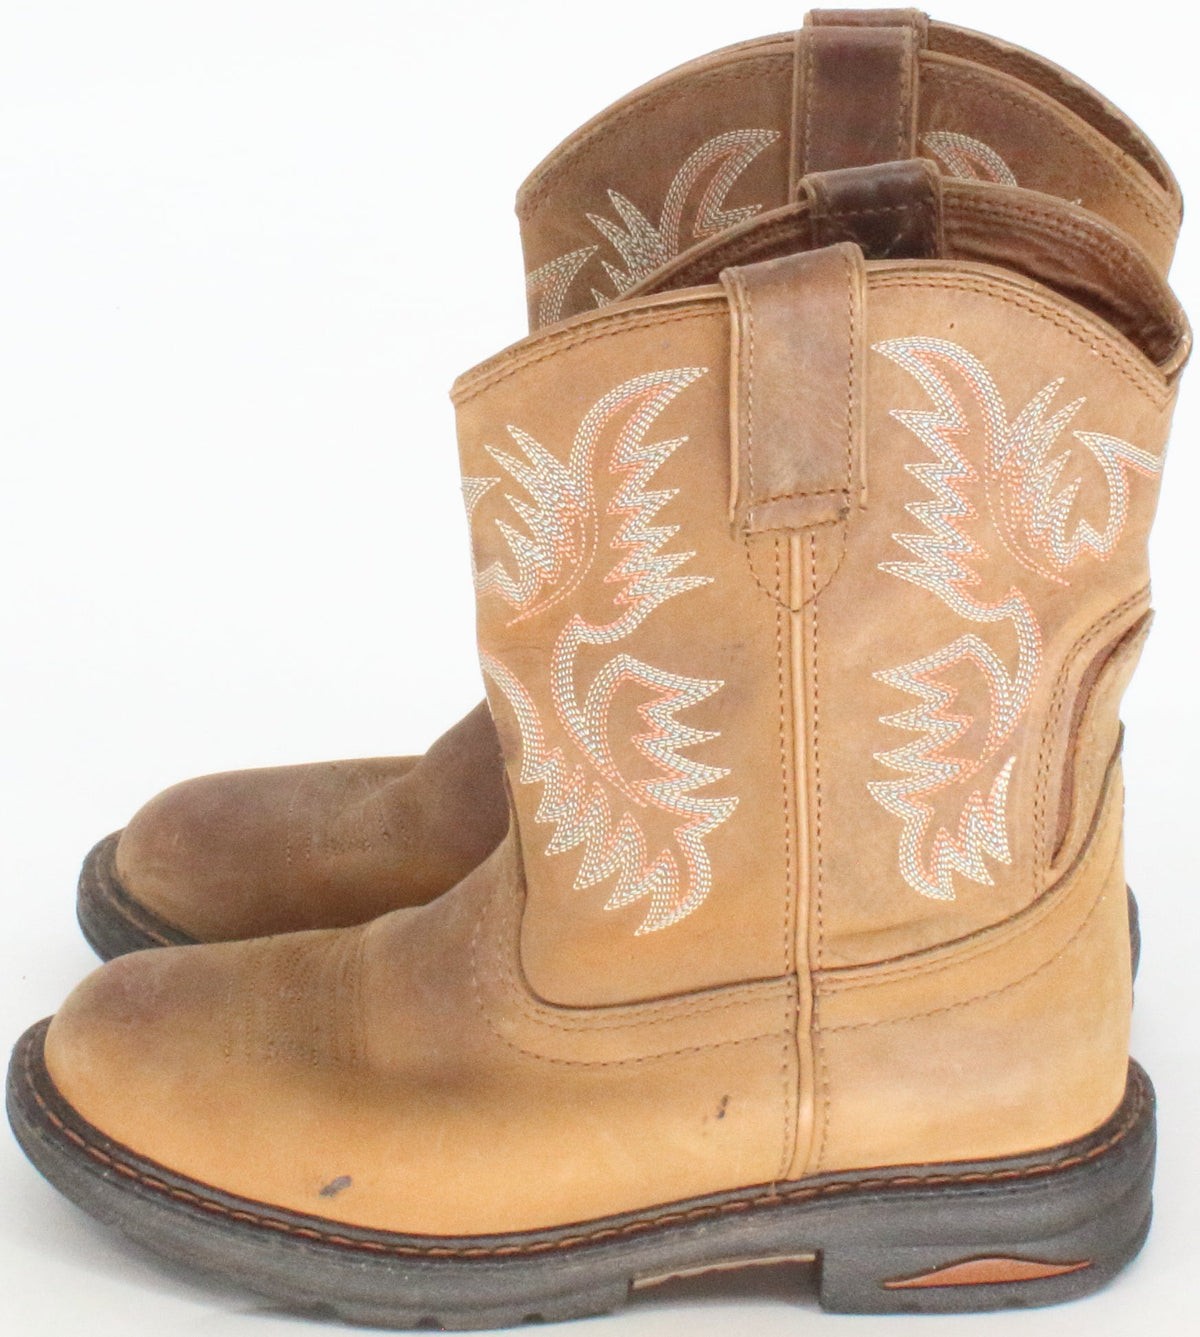 Ariat Brown Western Boots